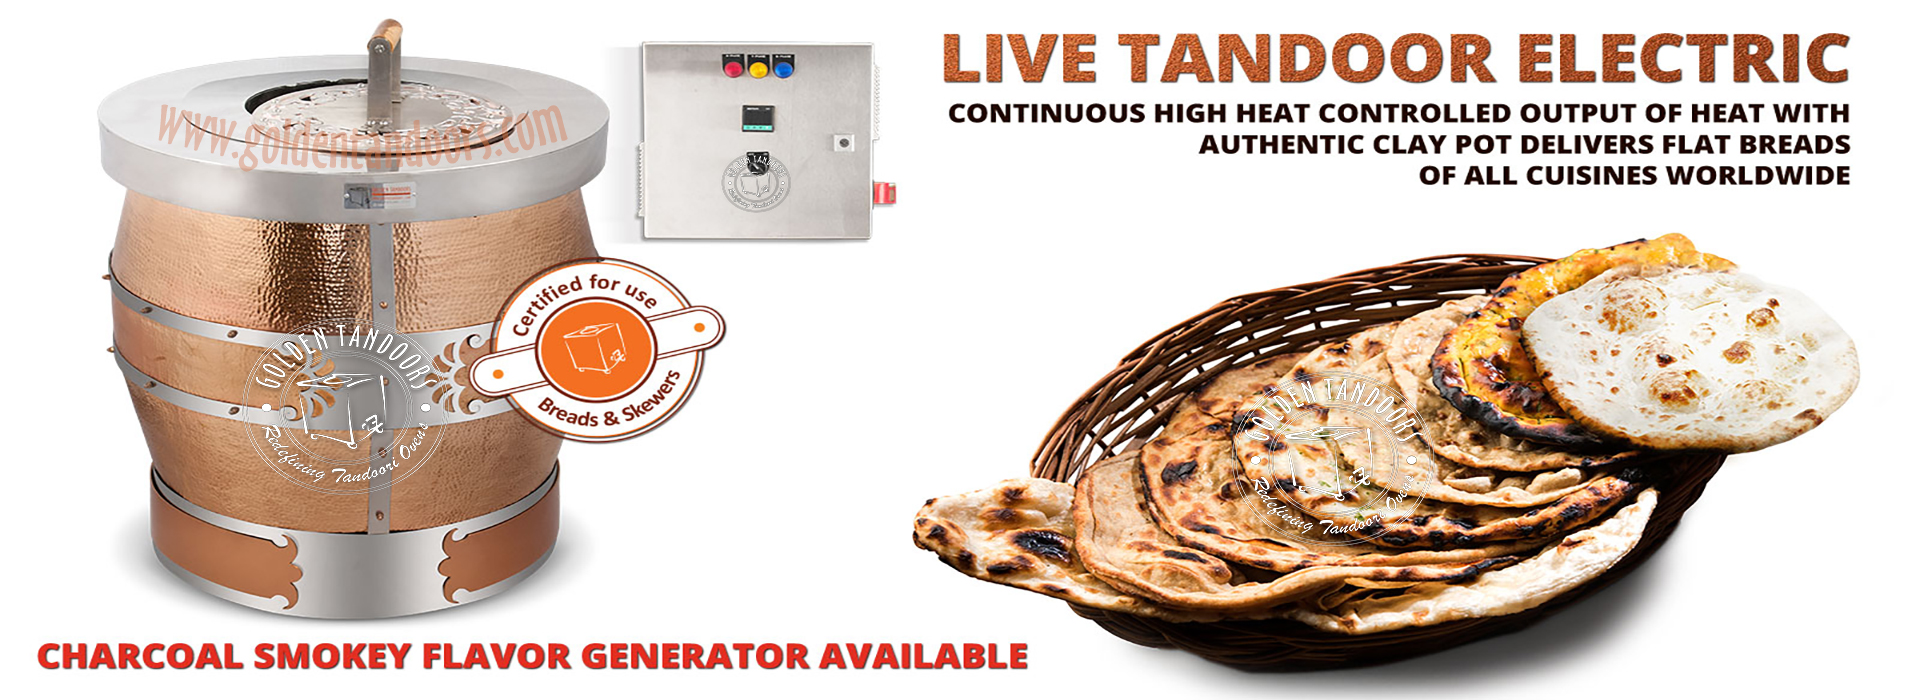 Tandoori Food Items At Home With Electric Tandoor